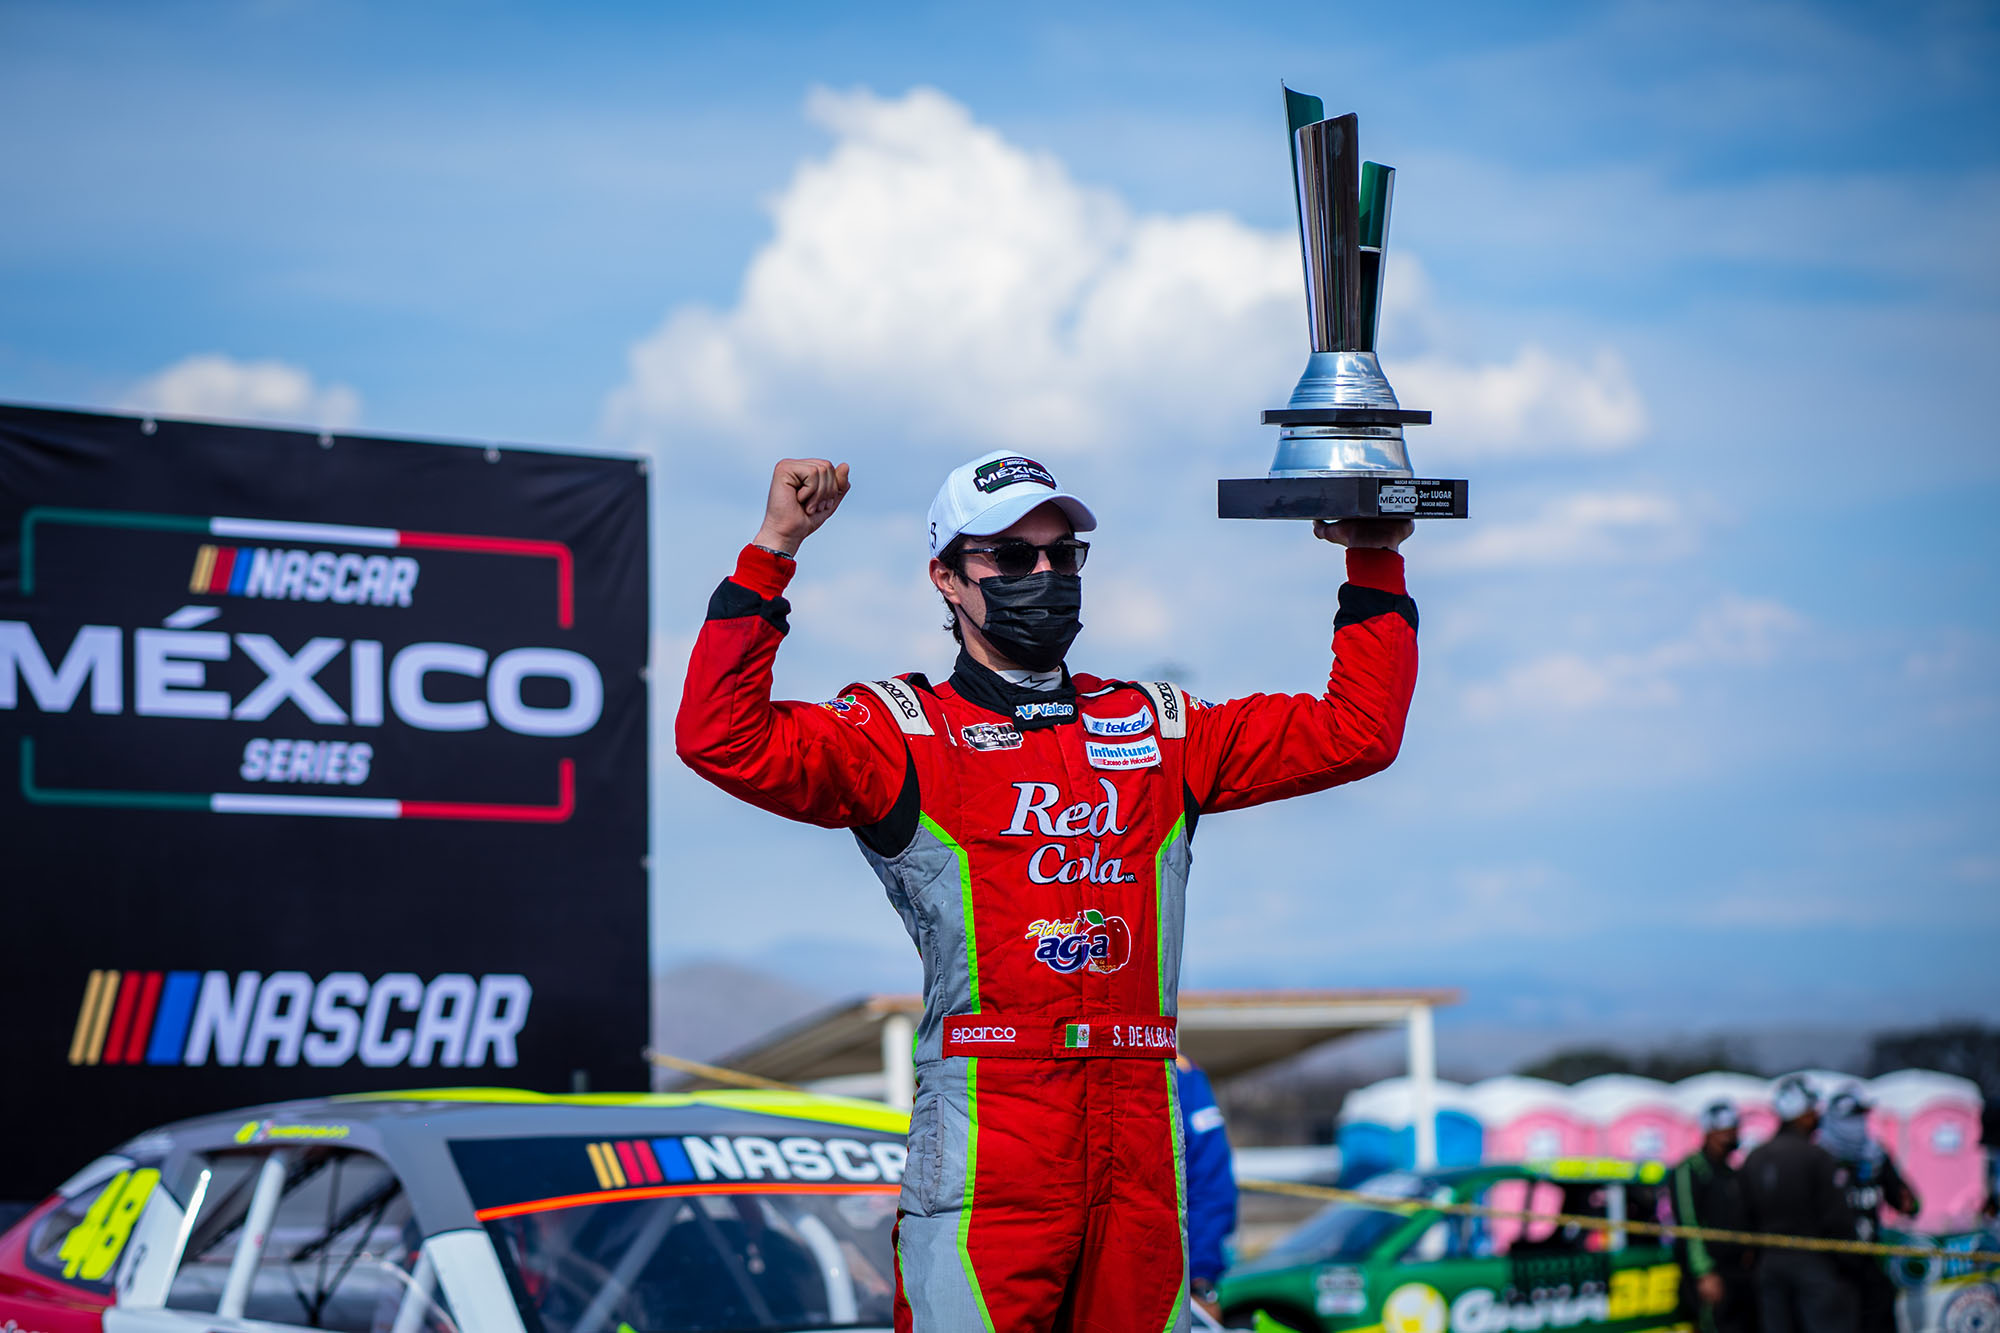 Querétaro, siguiente reto para el Sidral Aga Racing Team en NASCAR México